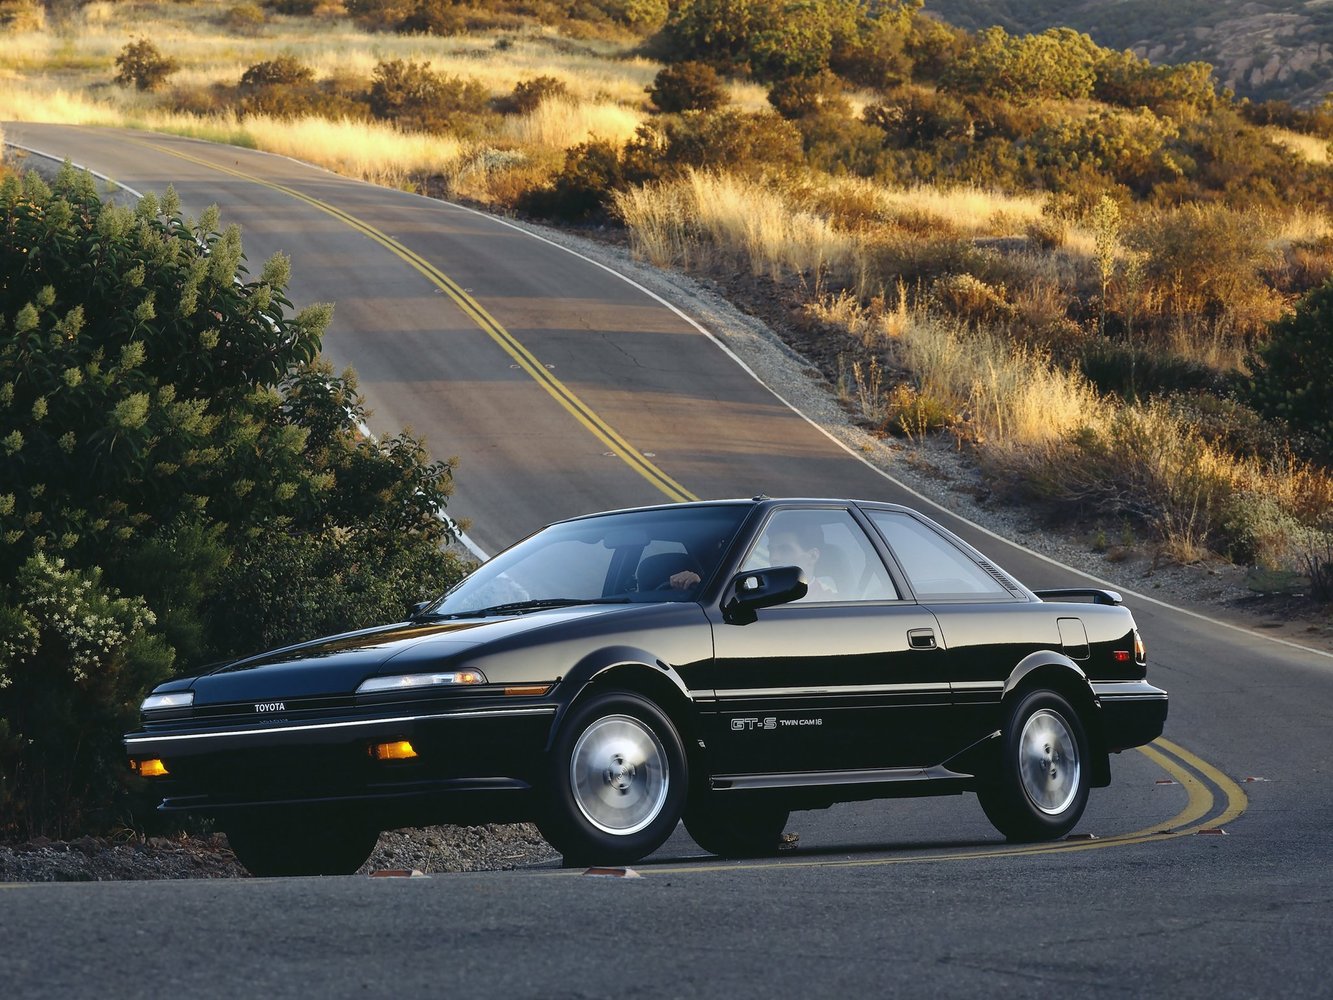 купе Toyota Corolla 1987 - 1991г выпуска модификация 1.5 AT (105 л.с.)